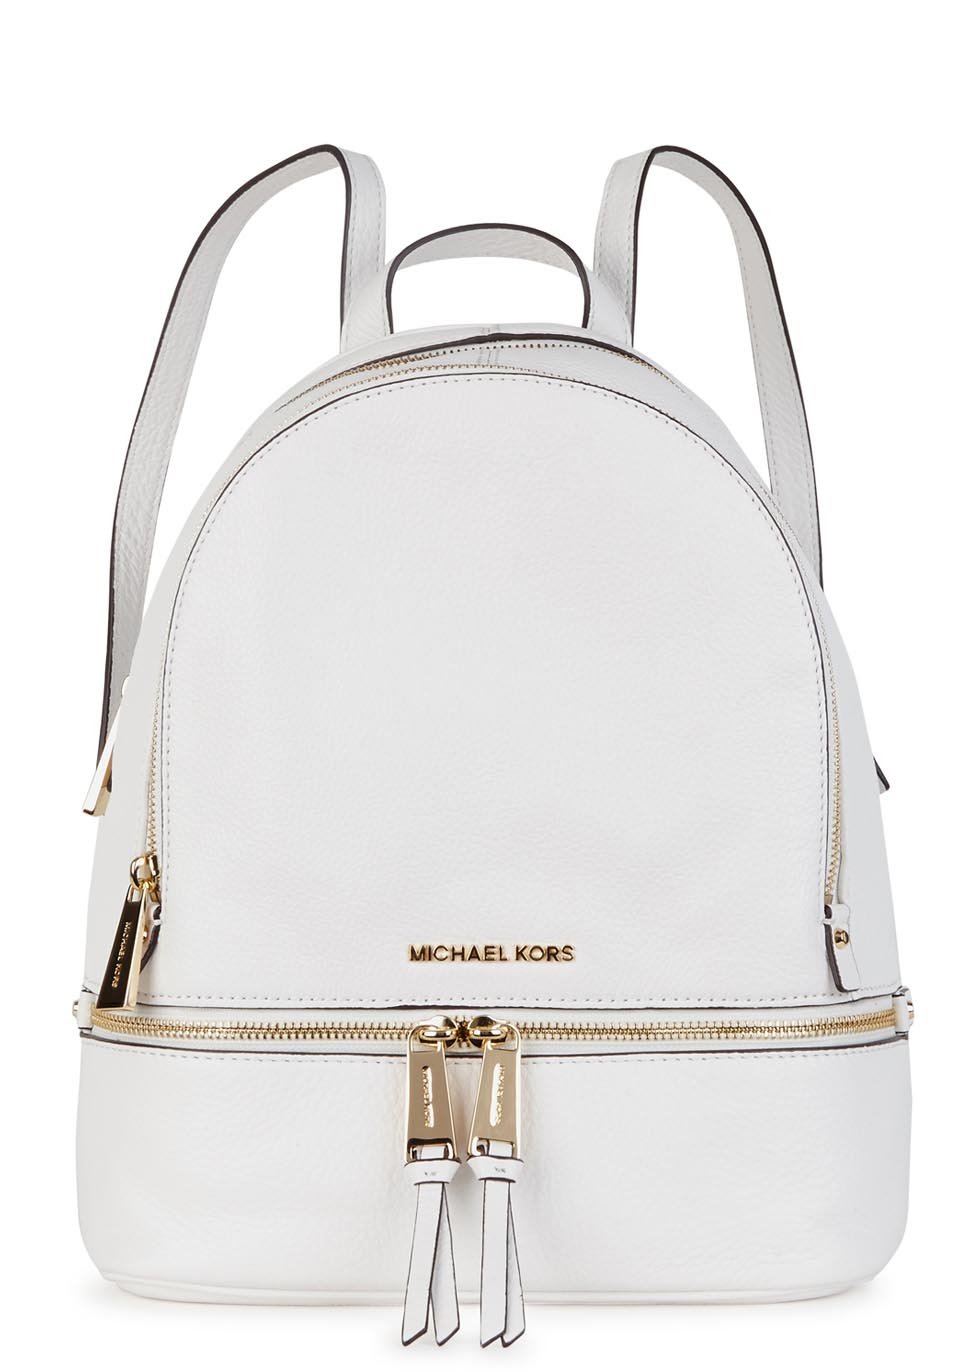 Michael Kors Rhea Small White Leather Backpack - Lyst